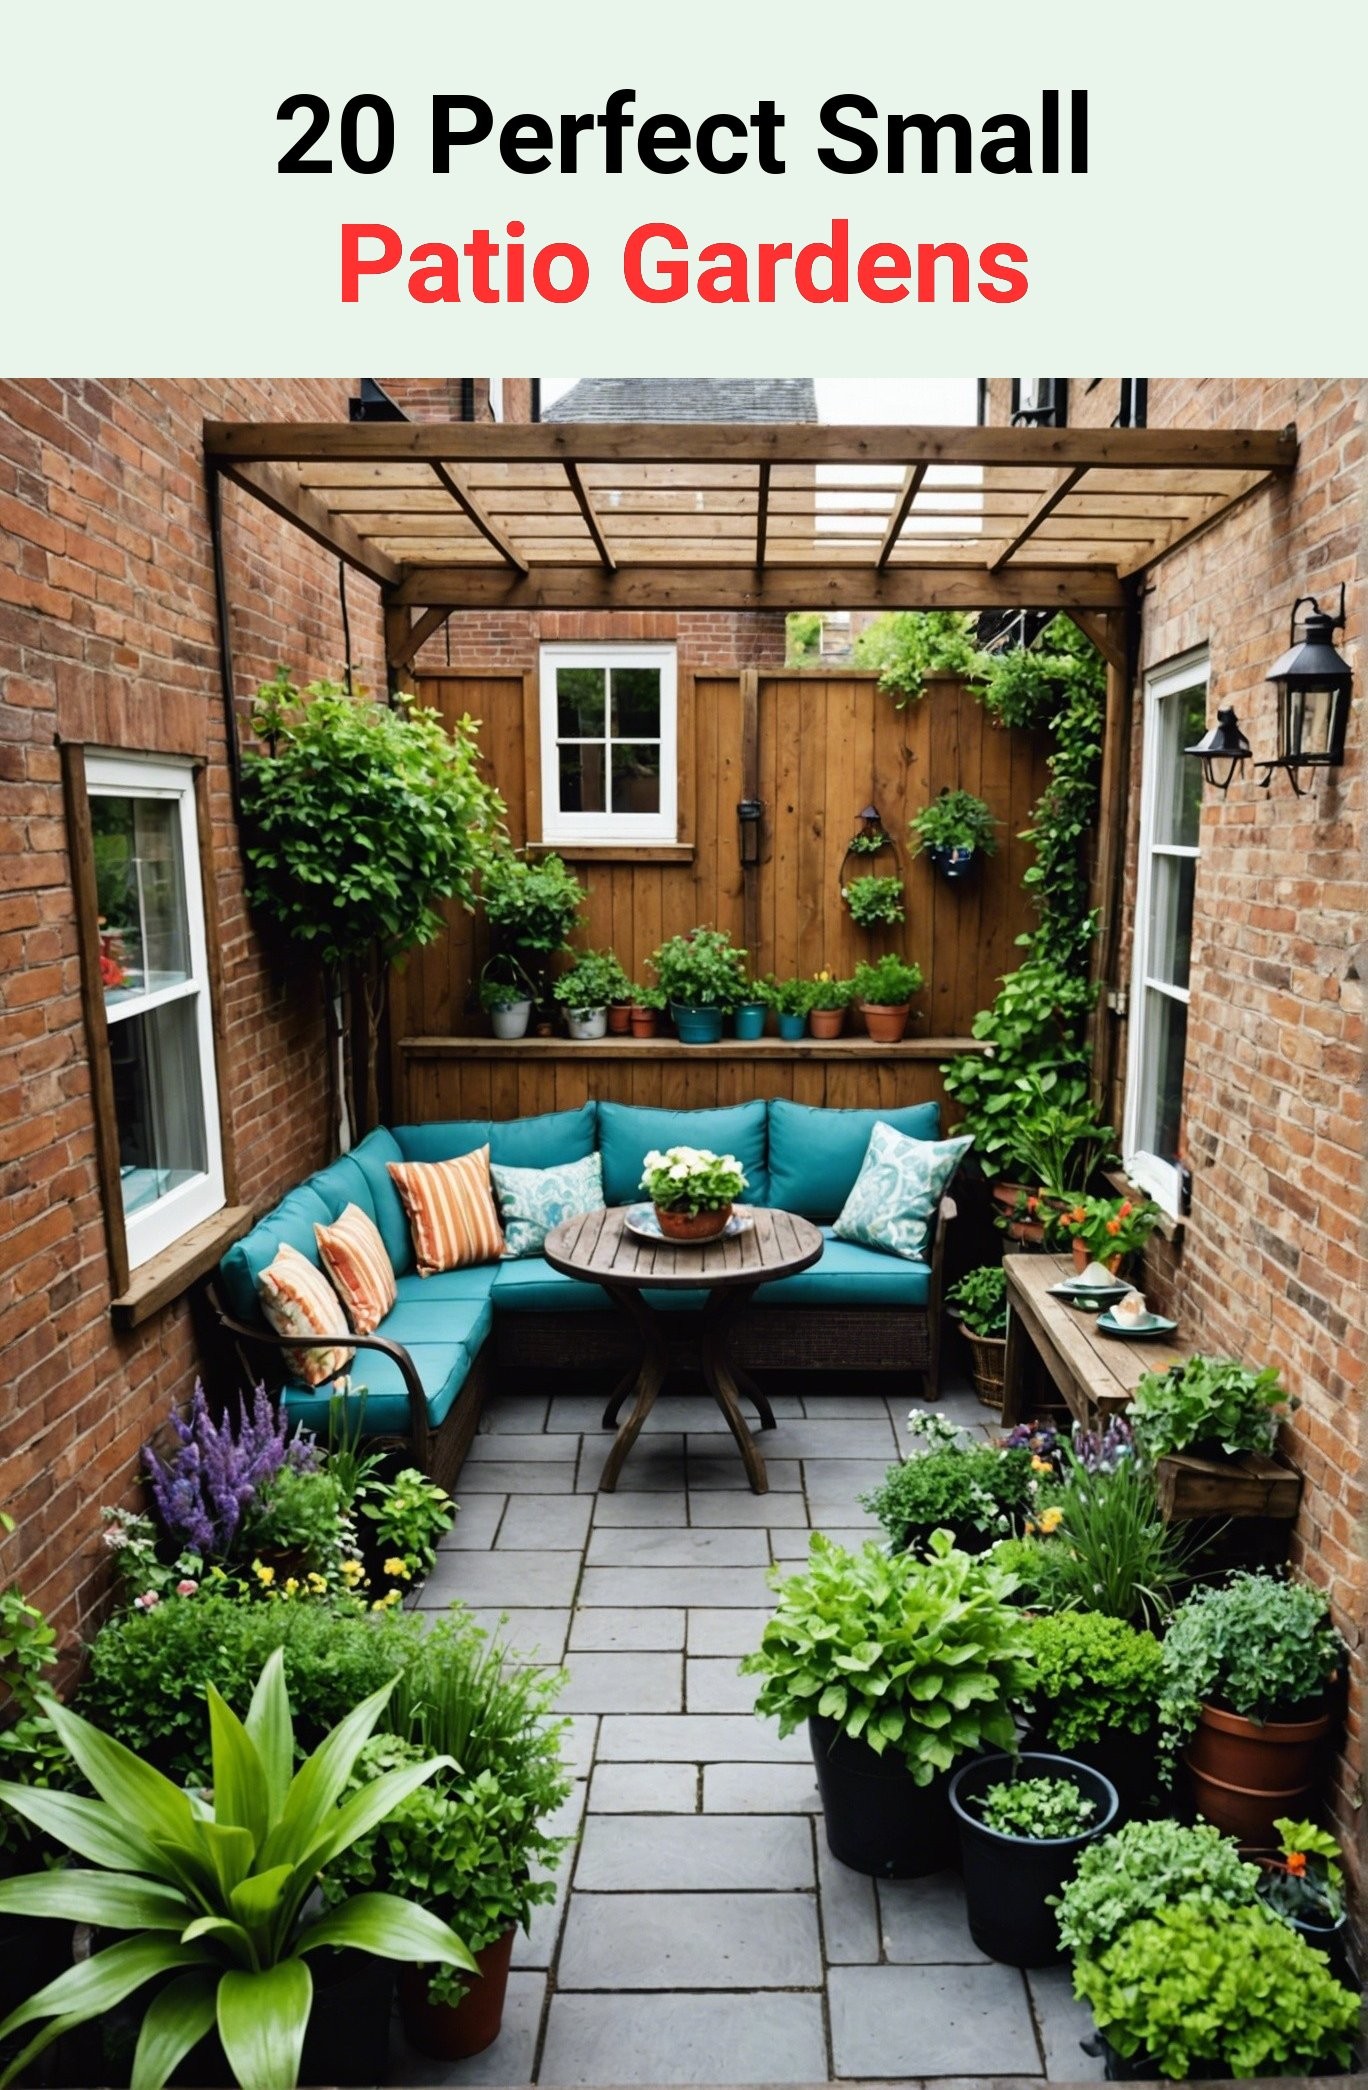 20 Perfect Small Patio Gardens